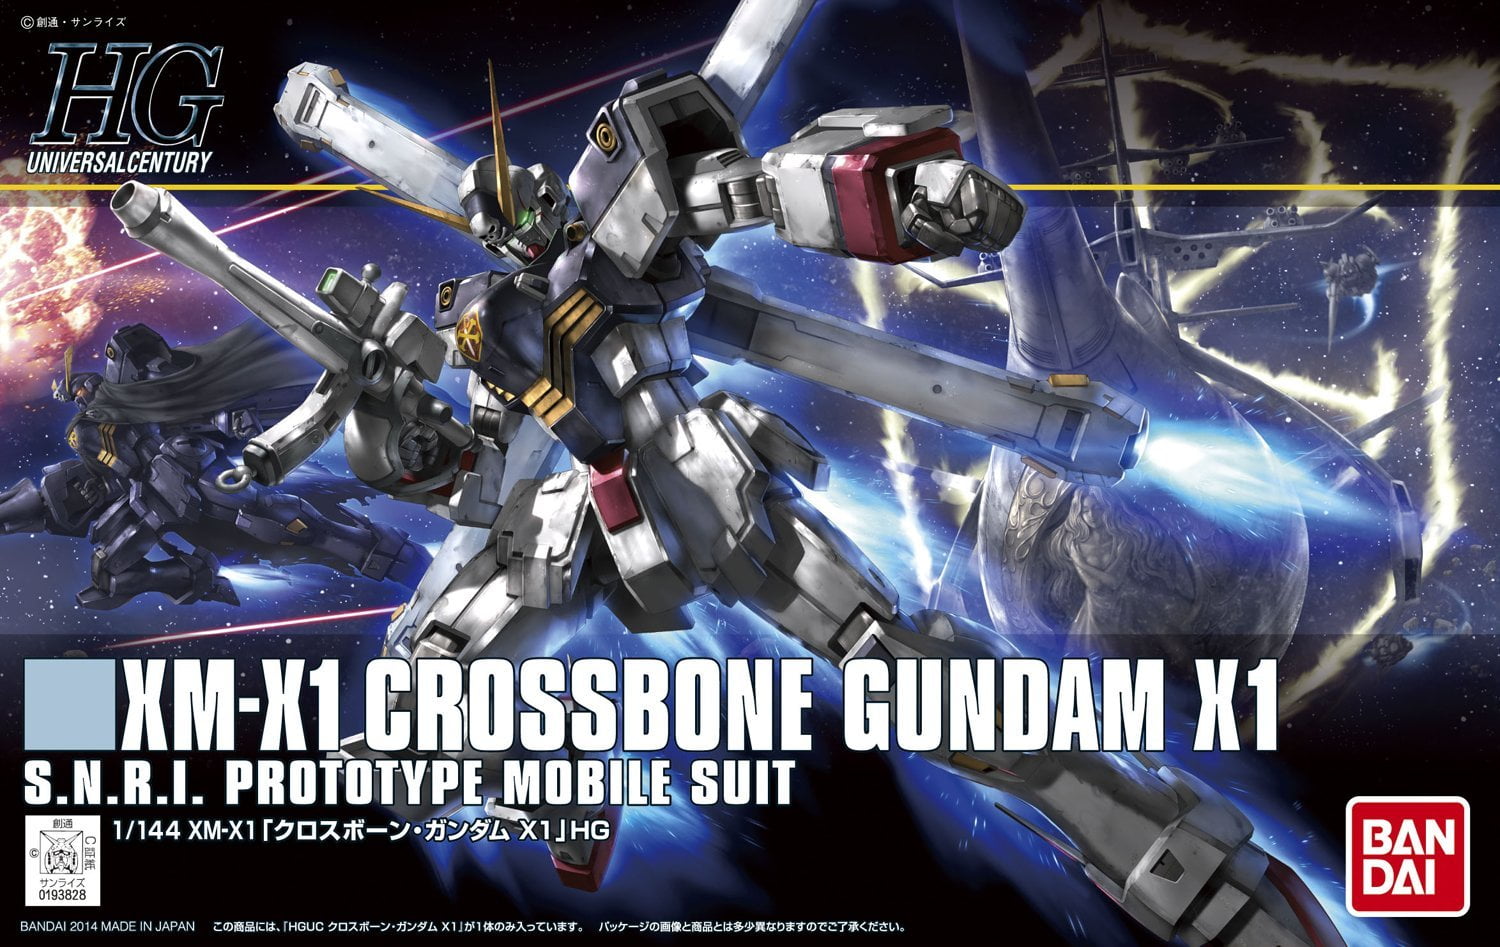 Bandai High Grade HGUC 1/144 Mobile Suit Gundam XM-X1 Crossbone Gundam X1 